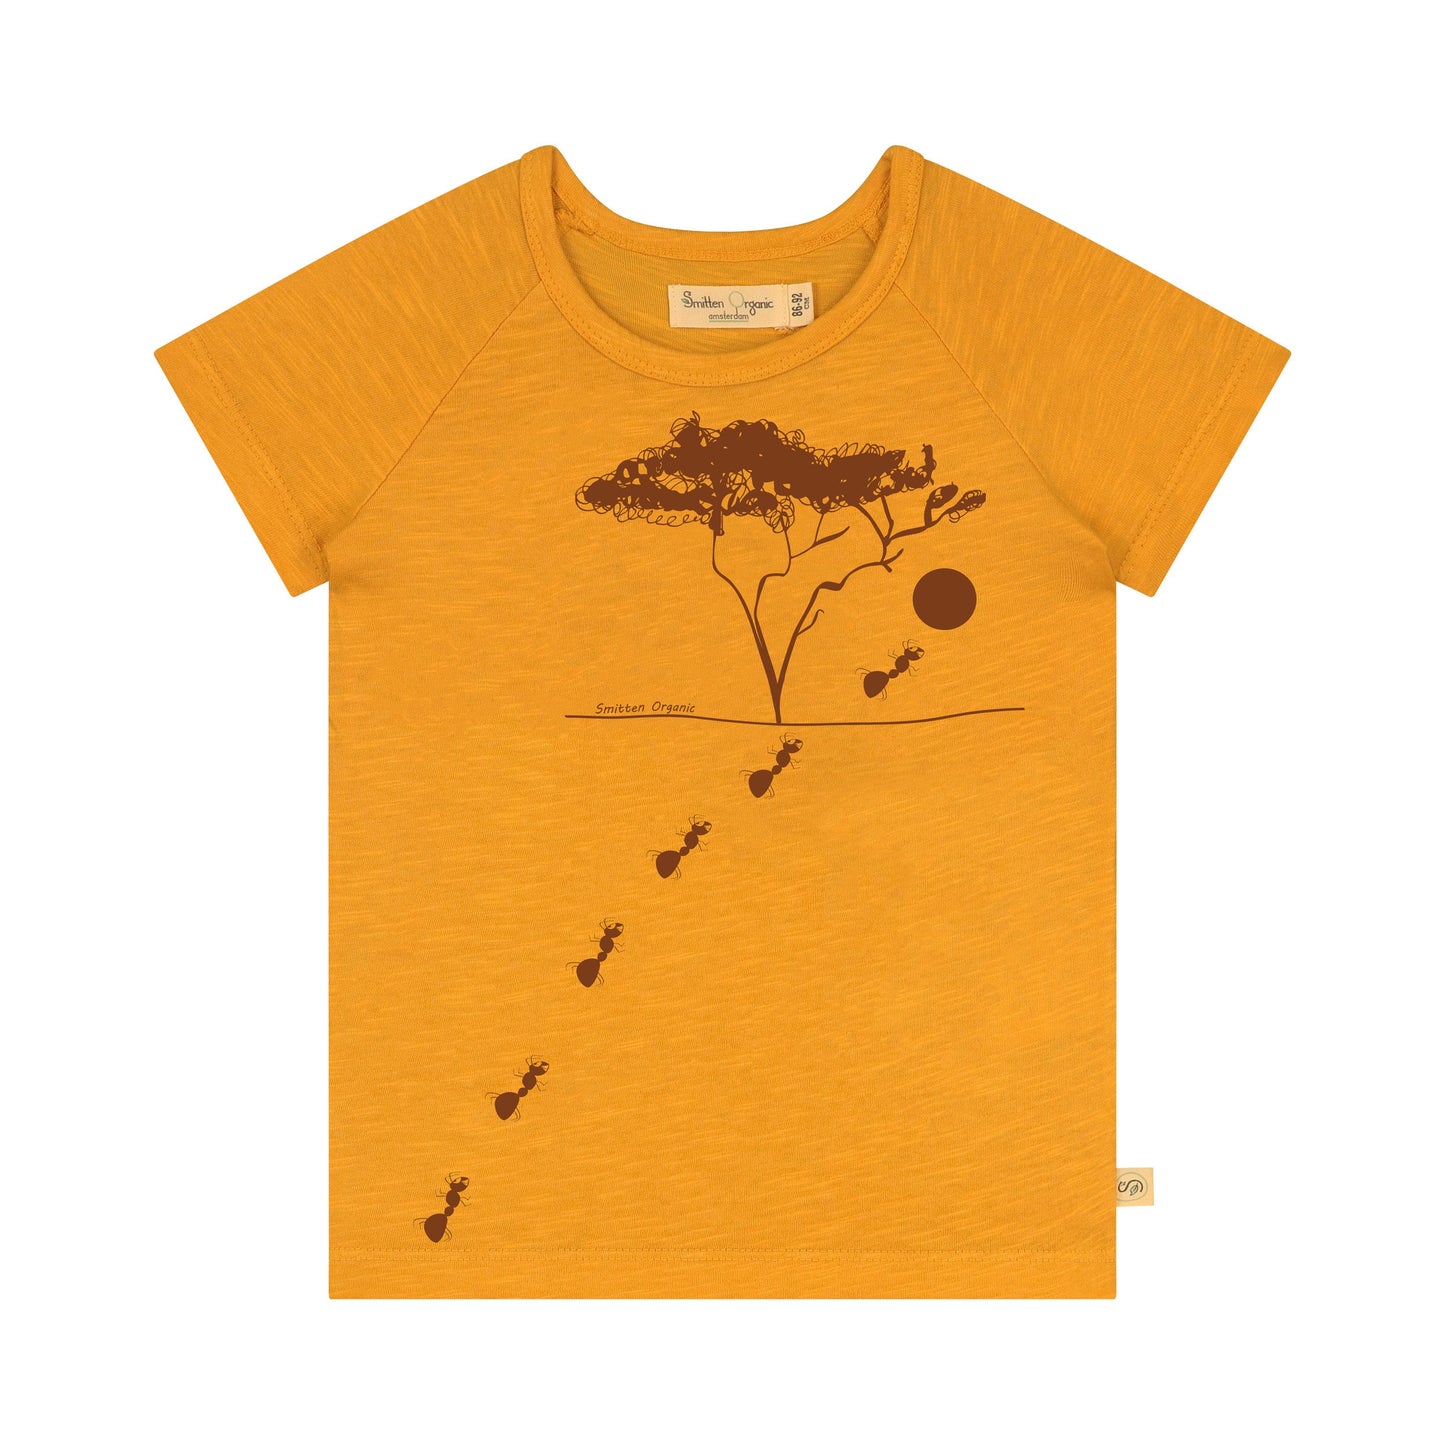 Acacia tree in safari short sleeve yellow T-shirt